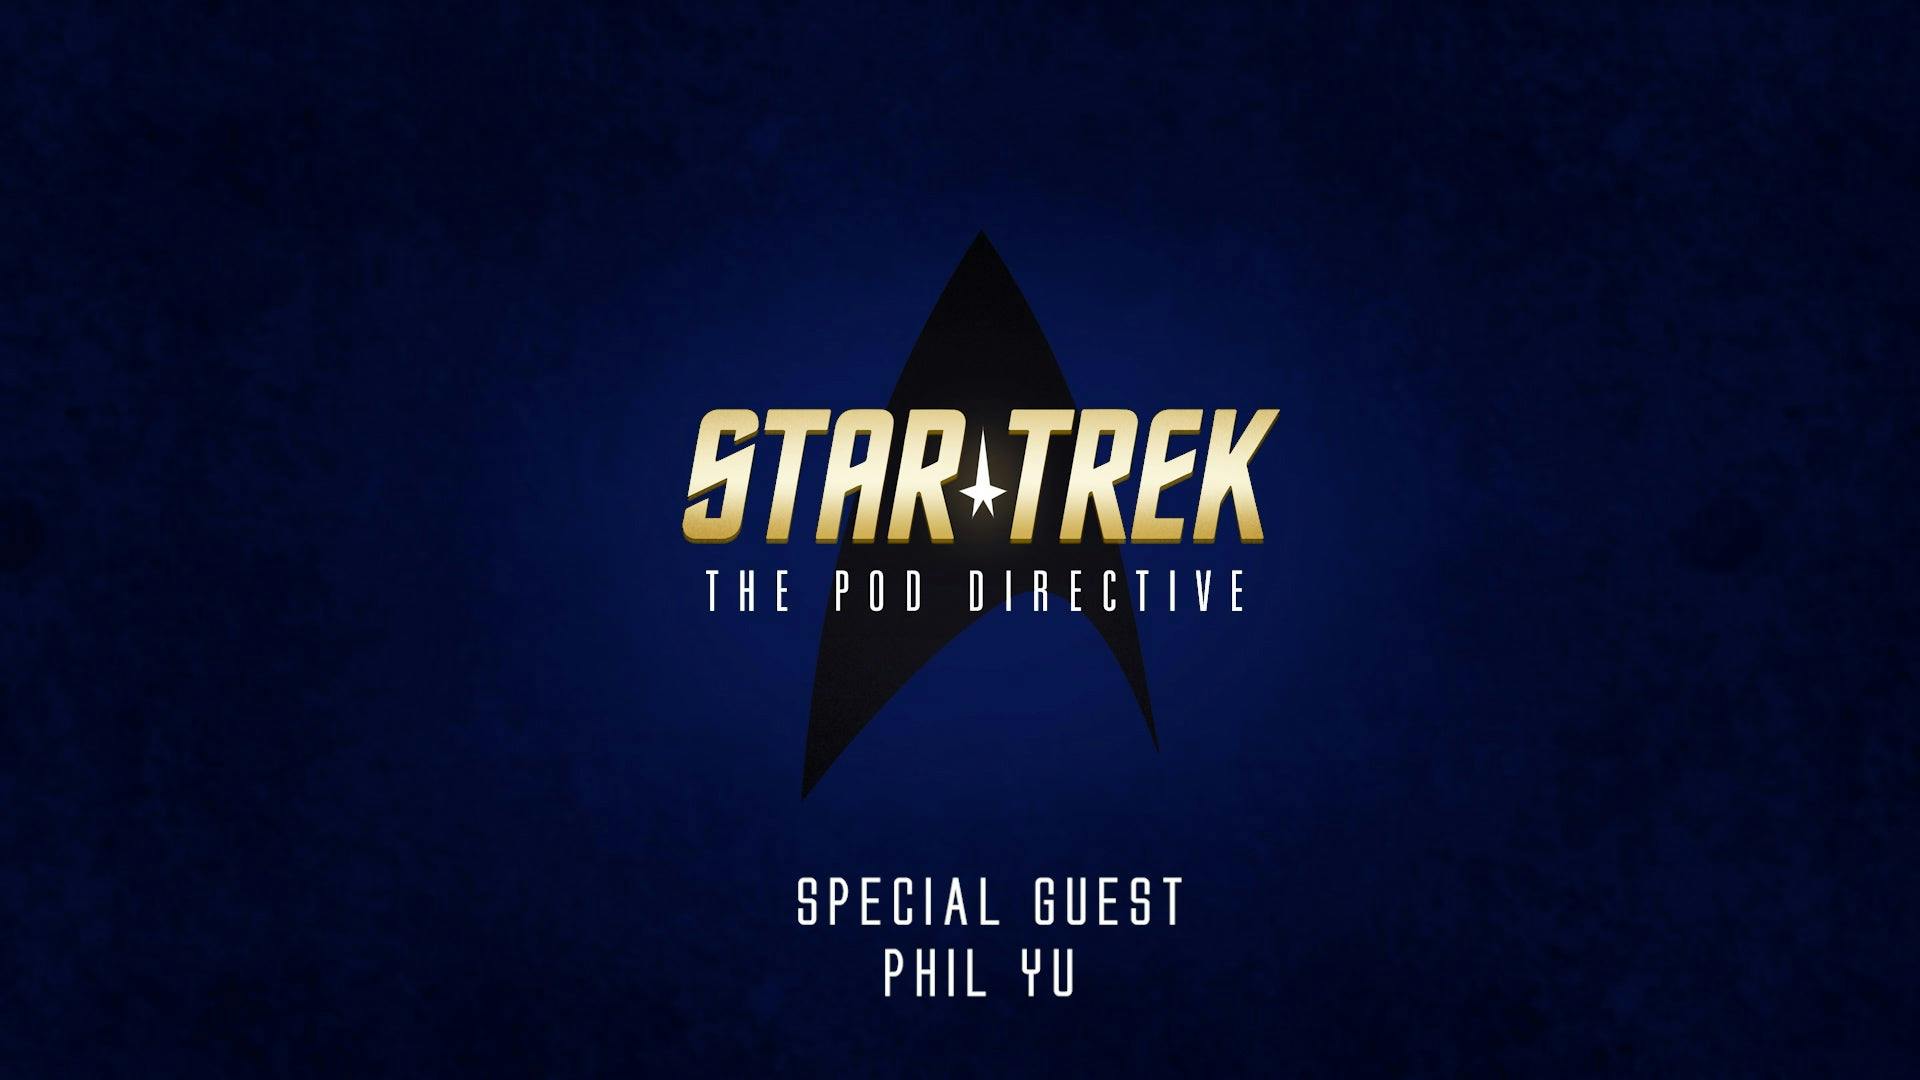 Star Trek: The Pod Directive with Phil Yu